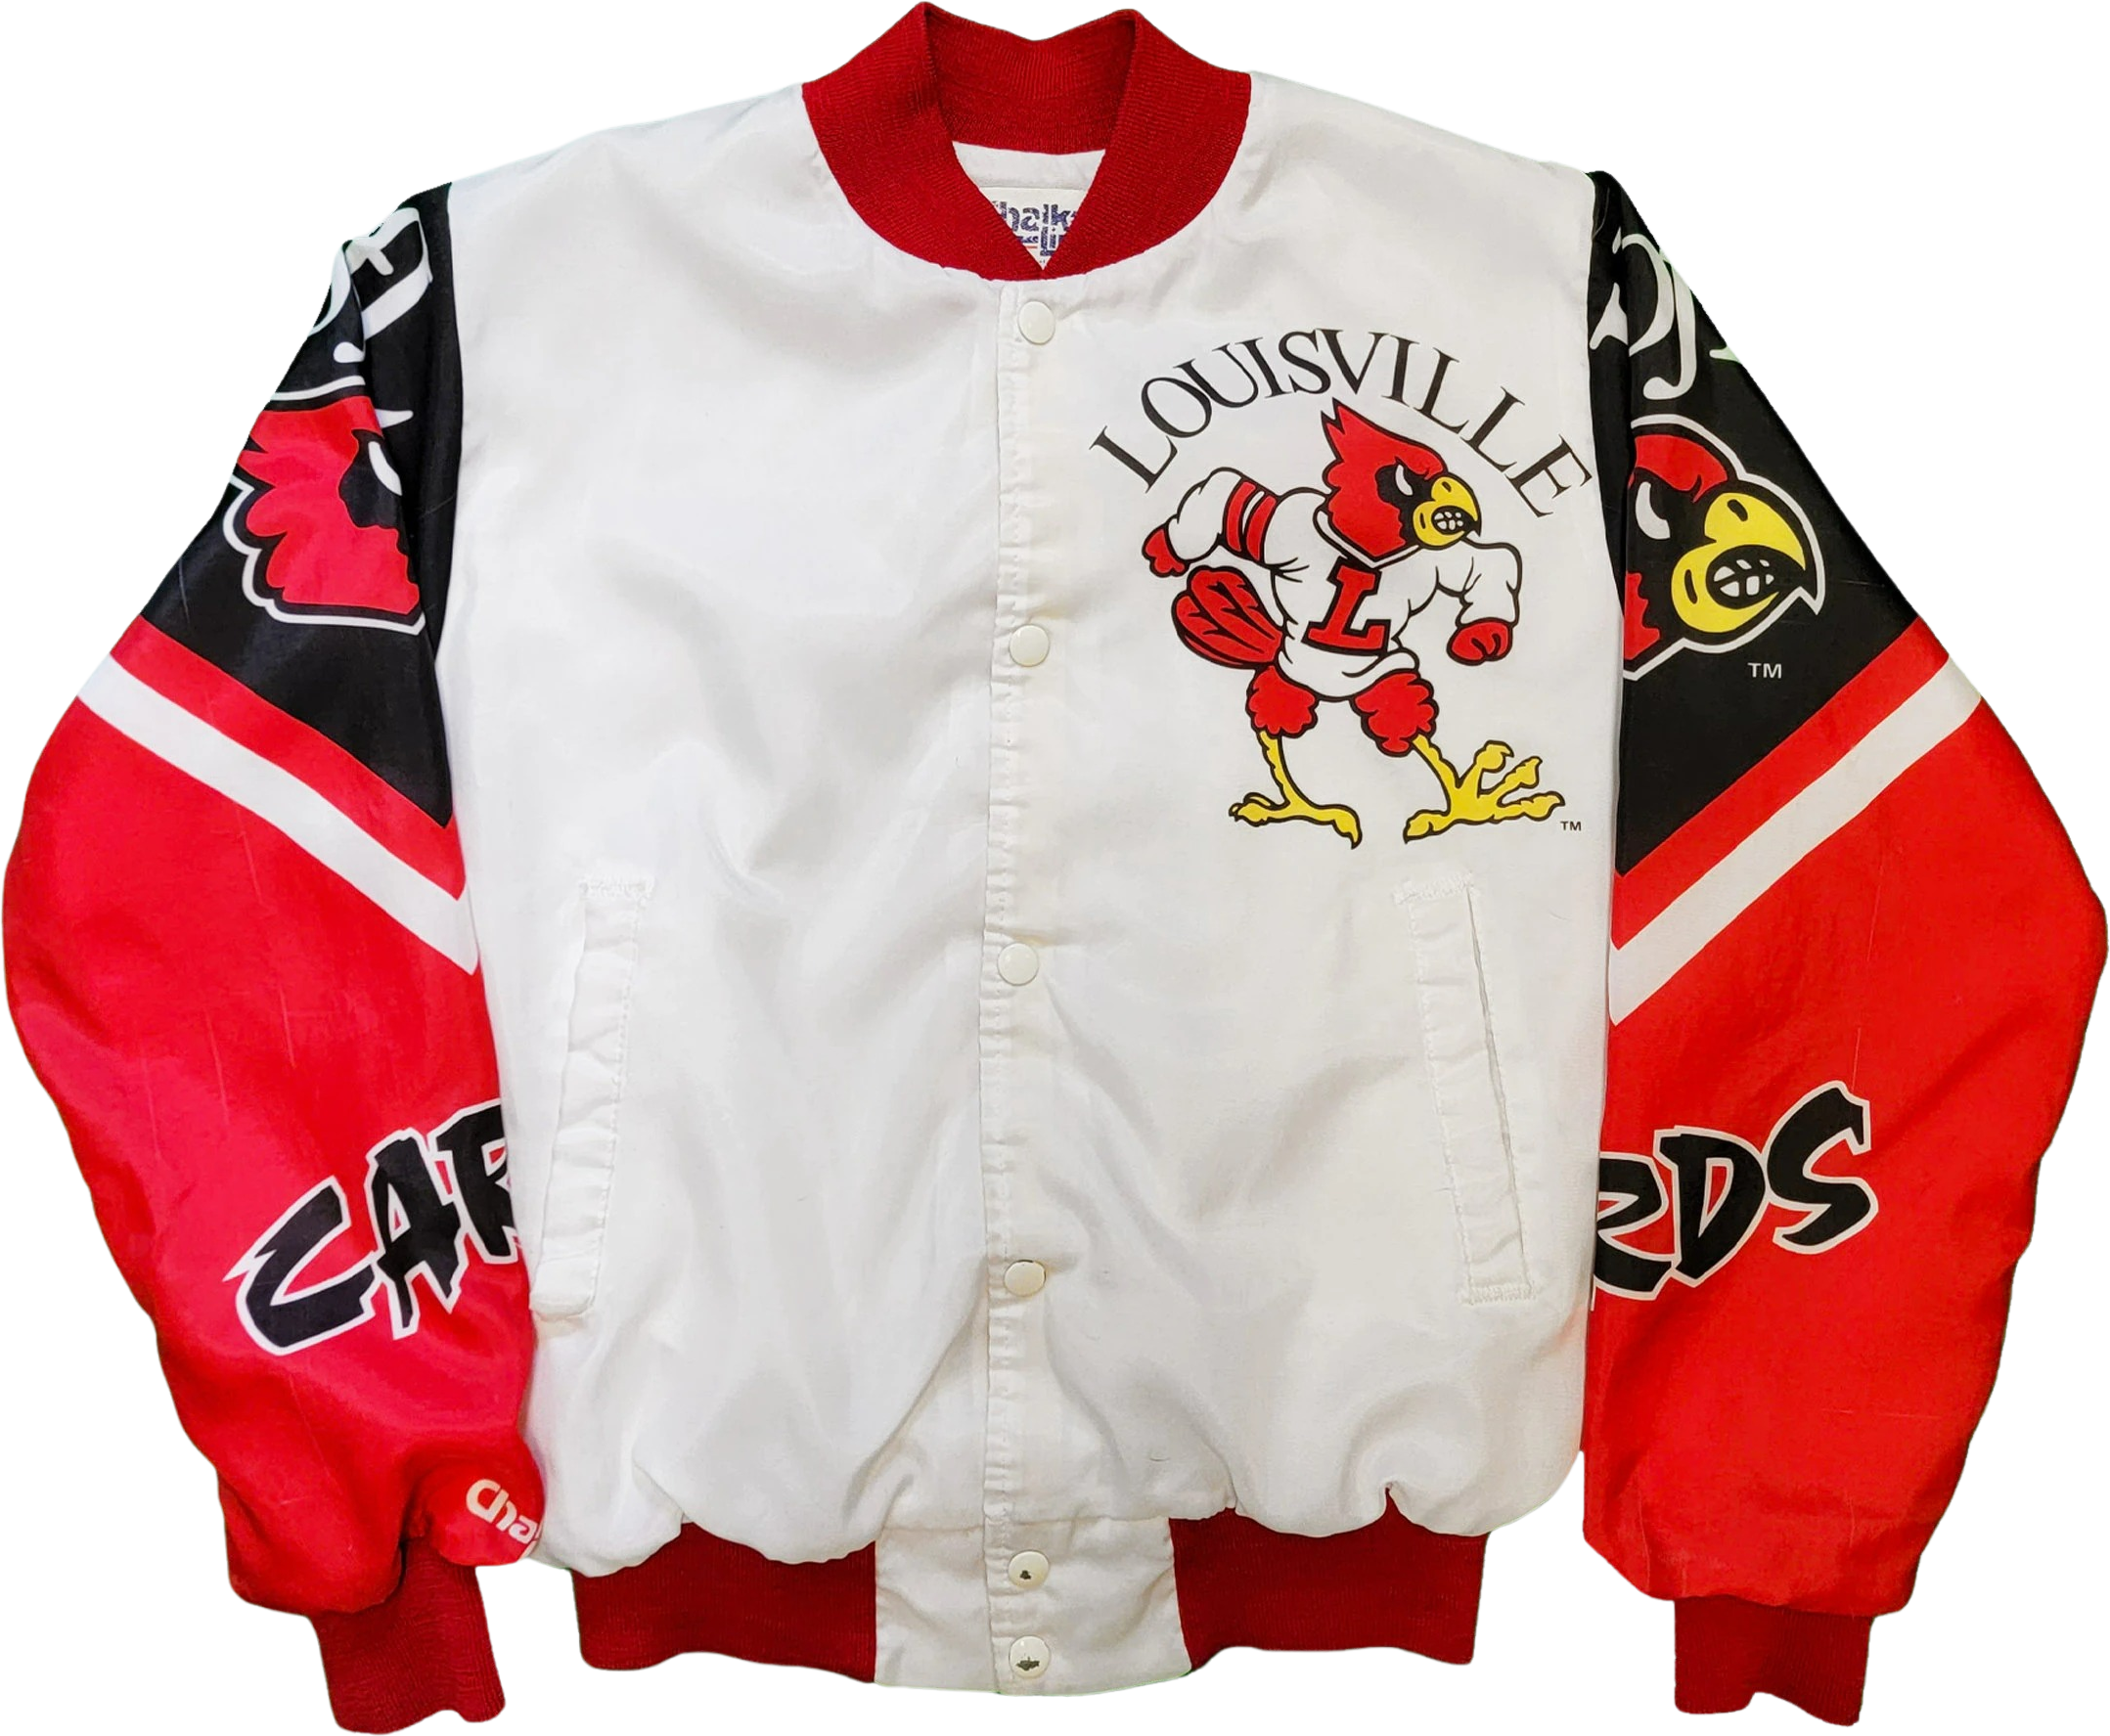 Louisville Cardinals vintage 90s satin bomber jacket - Size XXL